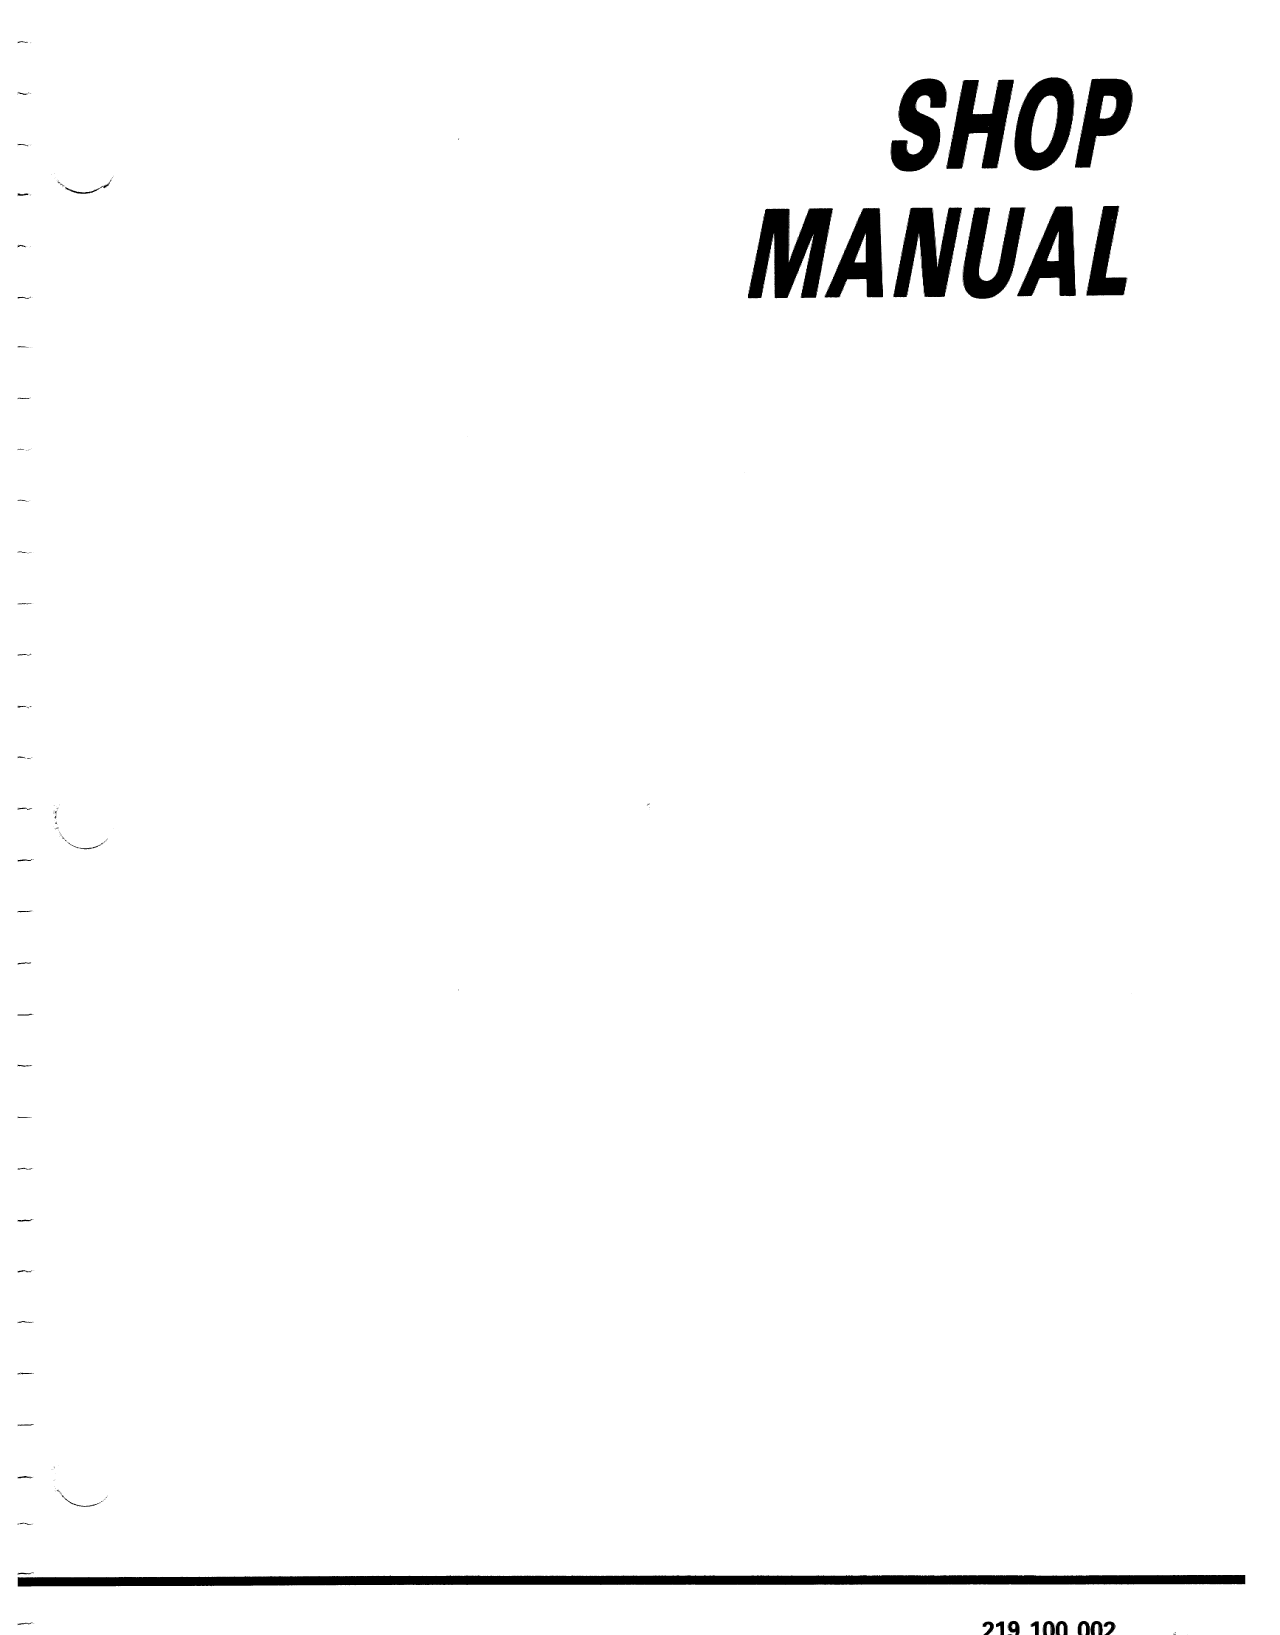 1990 Bombardier Sea-Doo, GT, SP shop manual Preview image 2